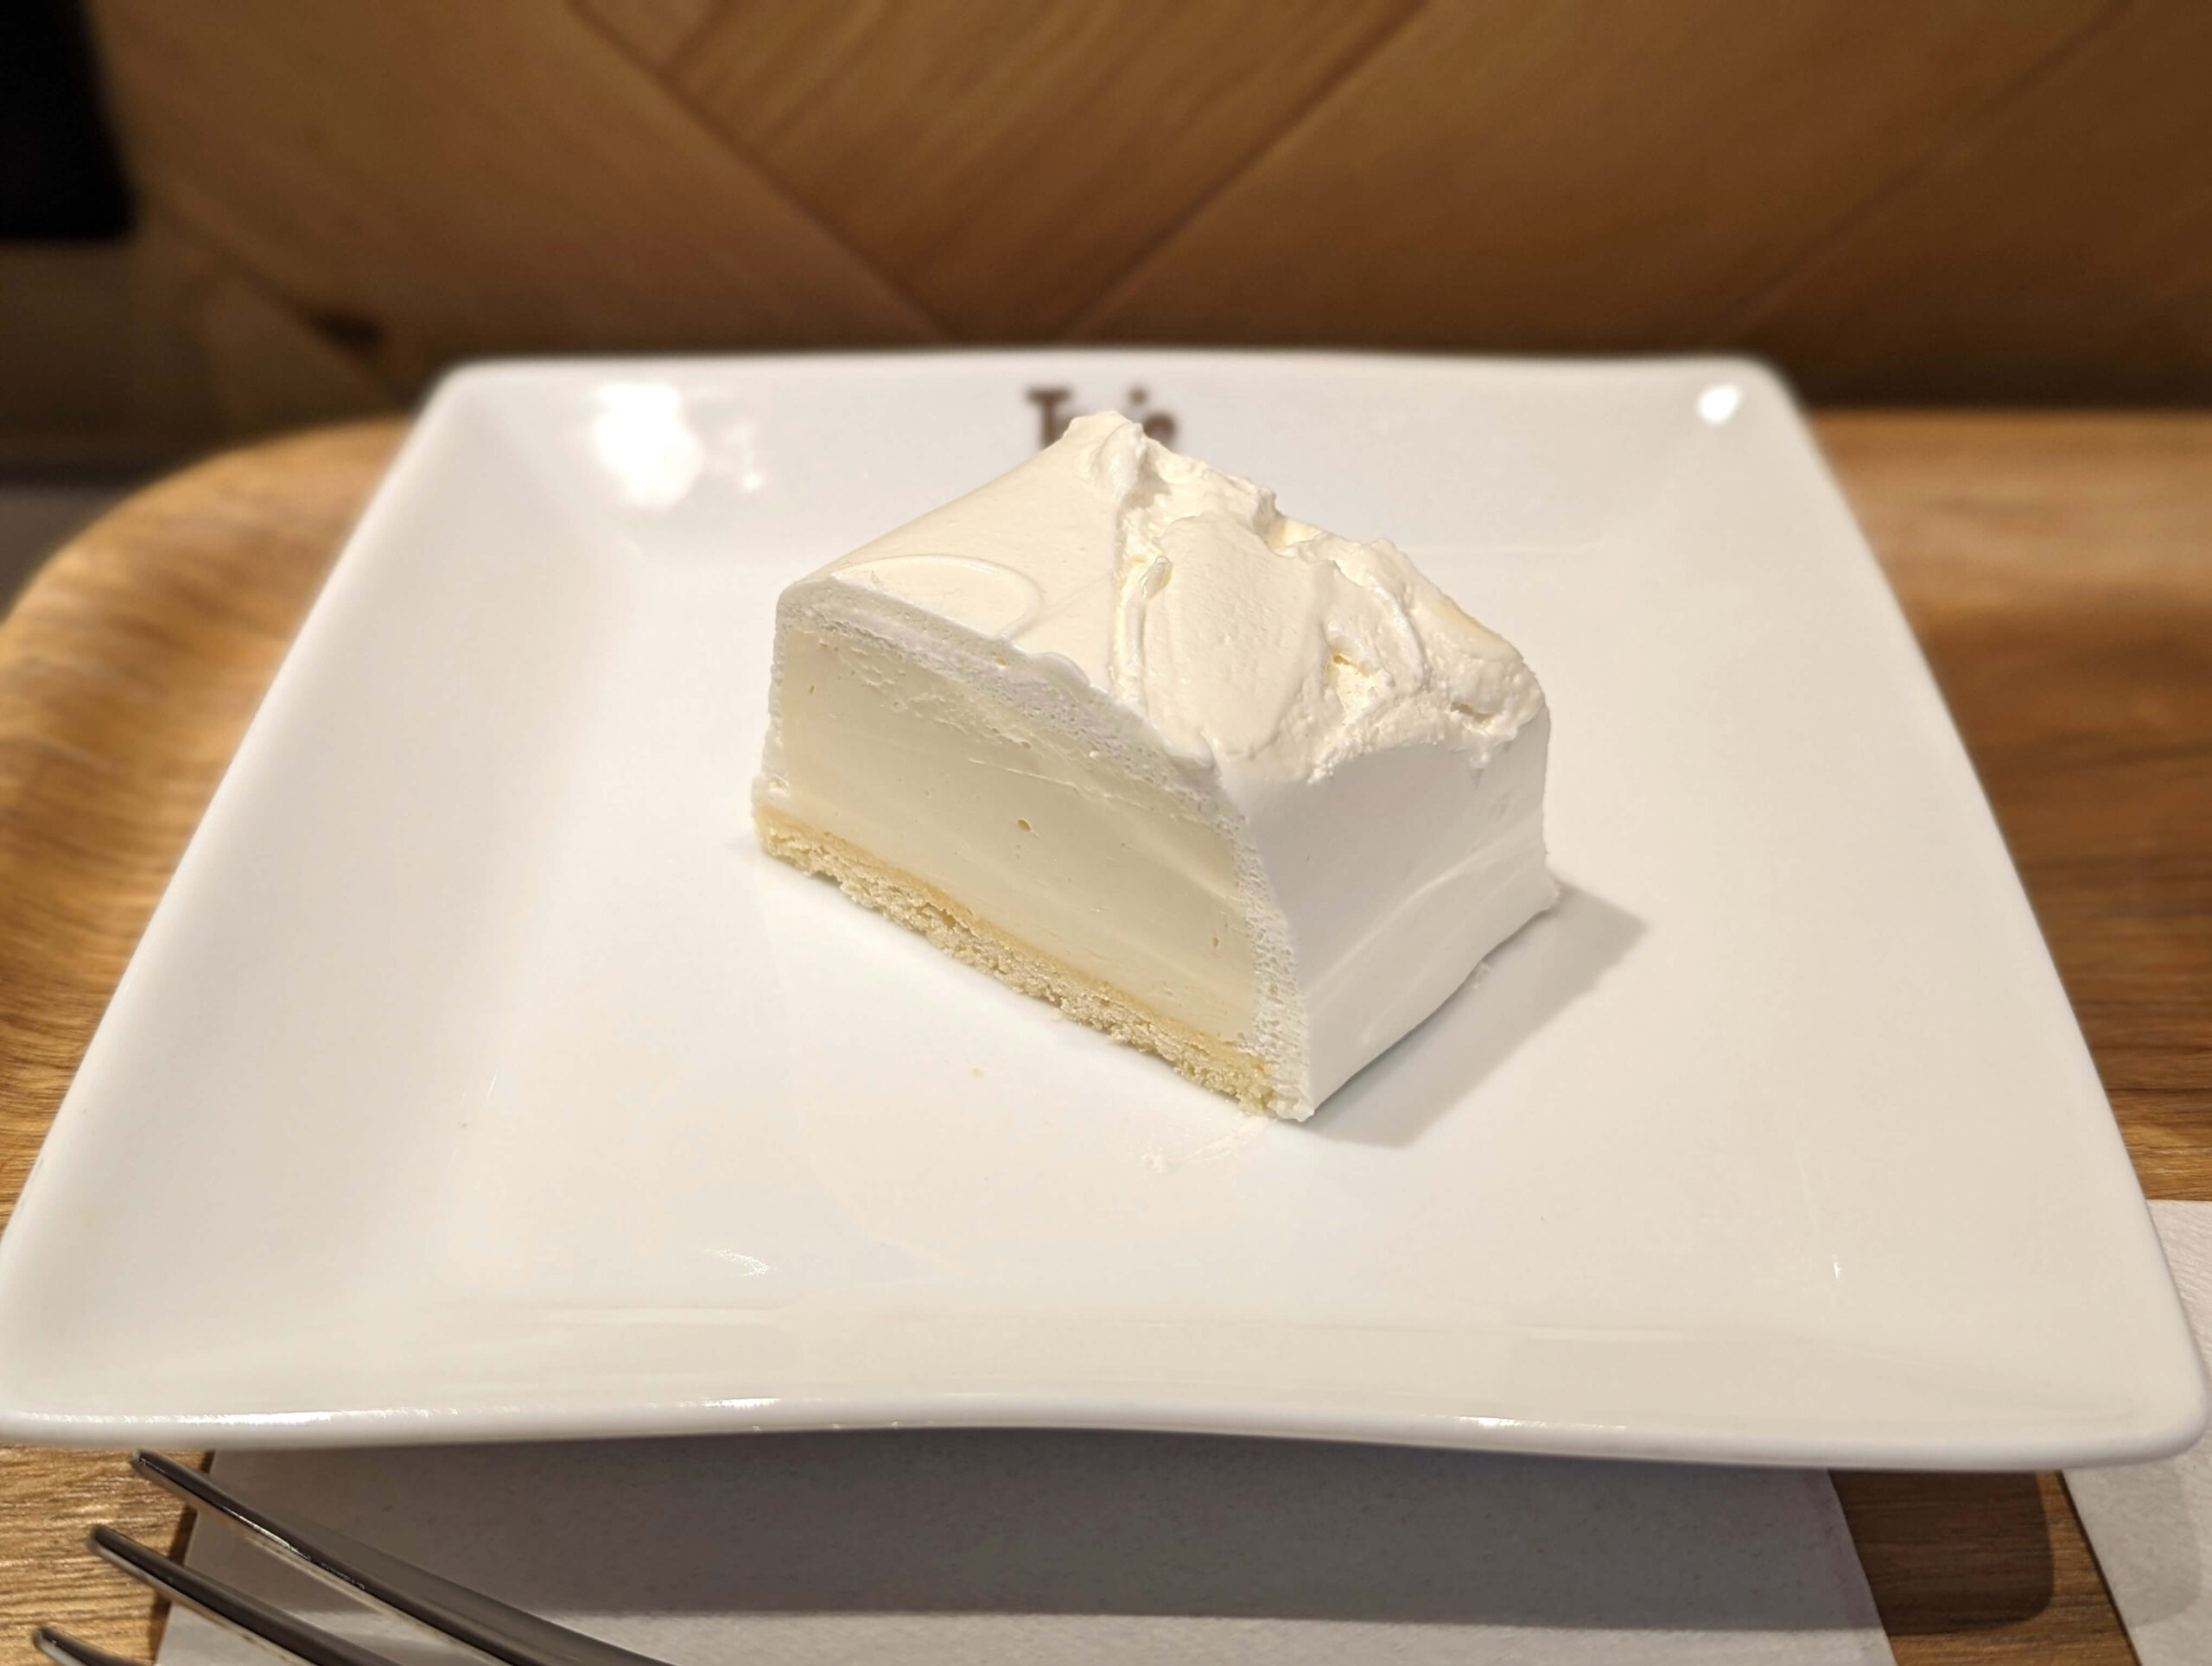 Top’s KEY'S CAFE（トップスキーズカフェ）のレアチーズケーキ